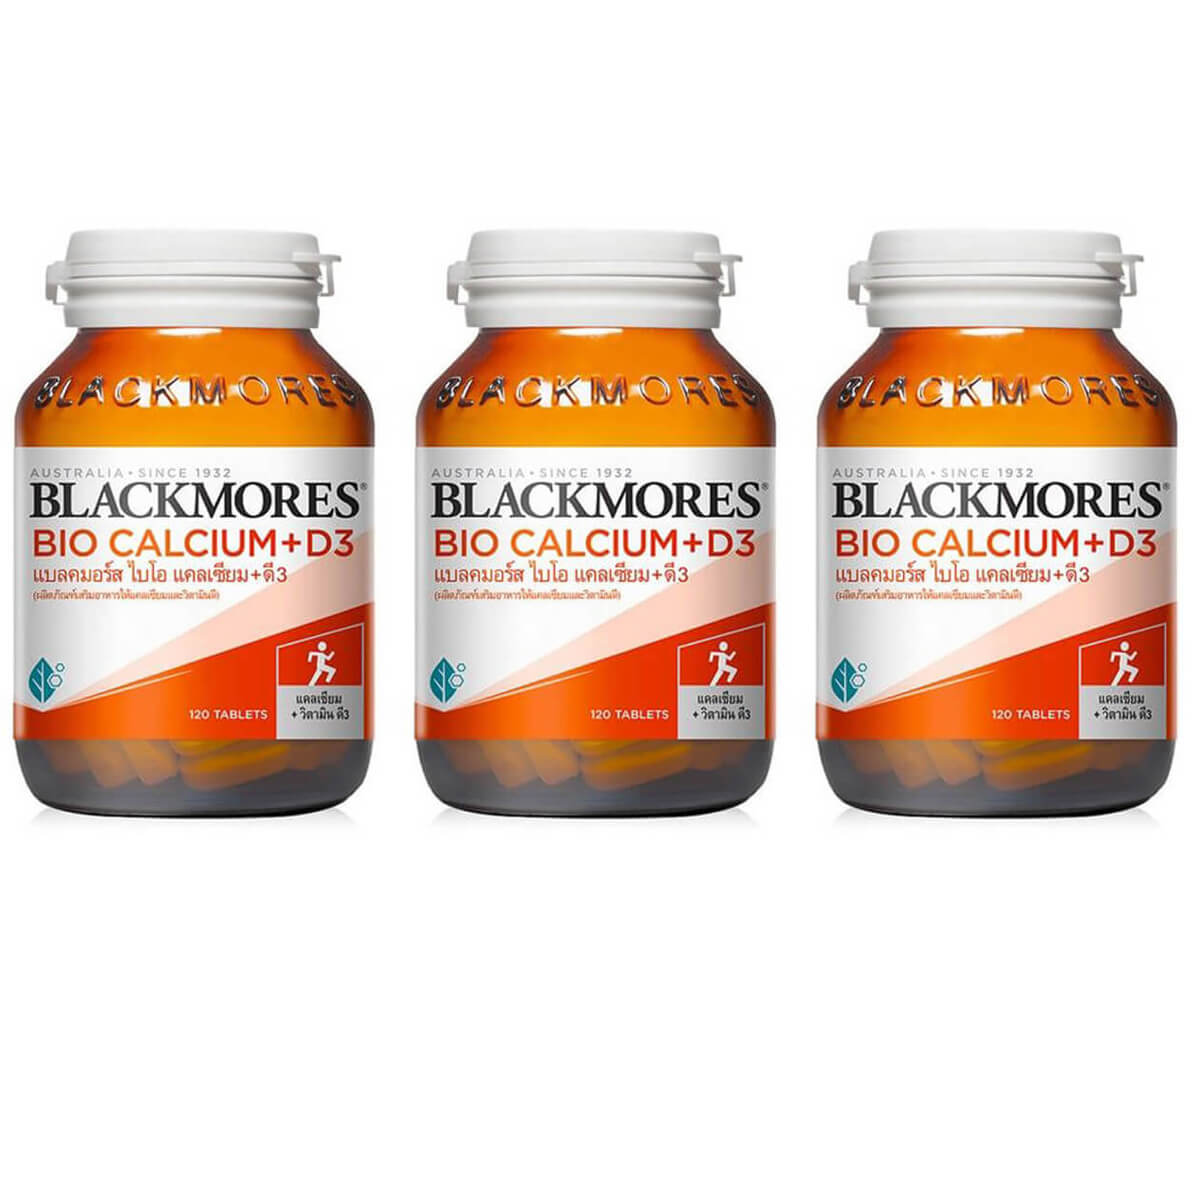 Пищевая добавка Blackmores Bio Calcium + D3, 3 банки по 120 таблеток по microsoft win rmt dsktp svcs cal 2019 english mlp 5 device cal 6vc 03804